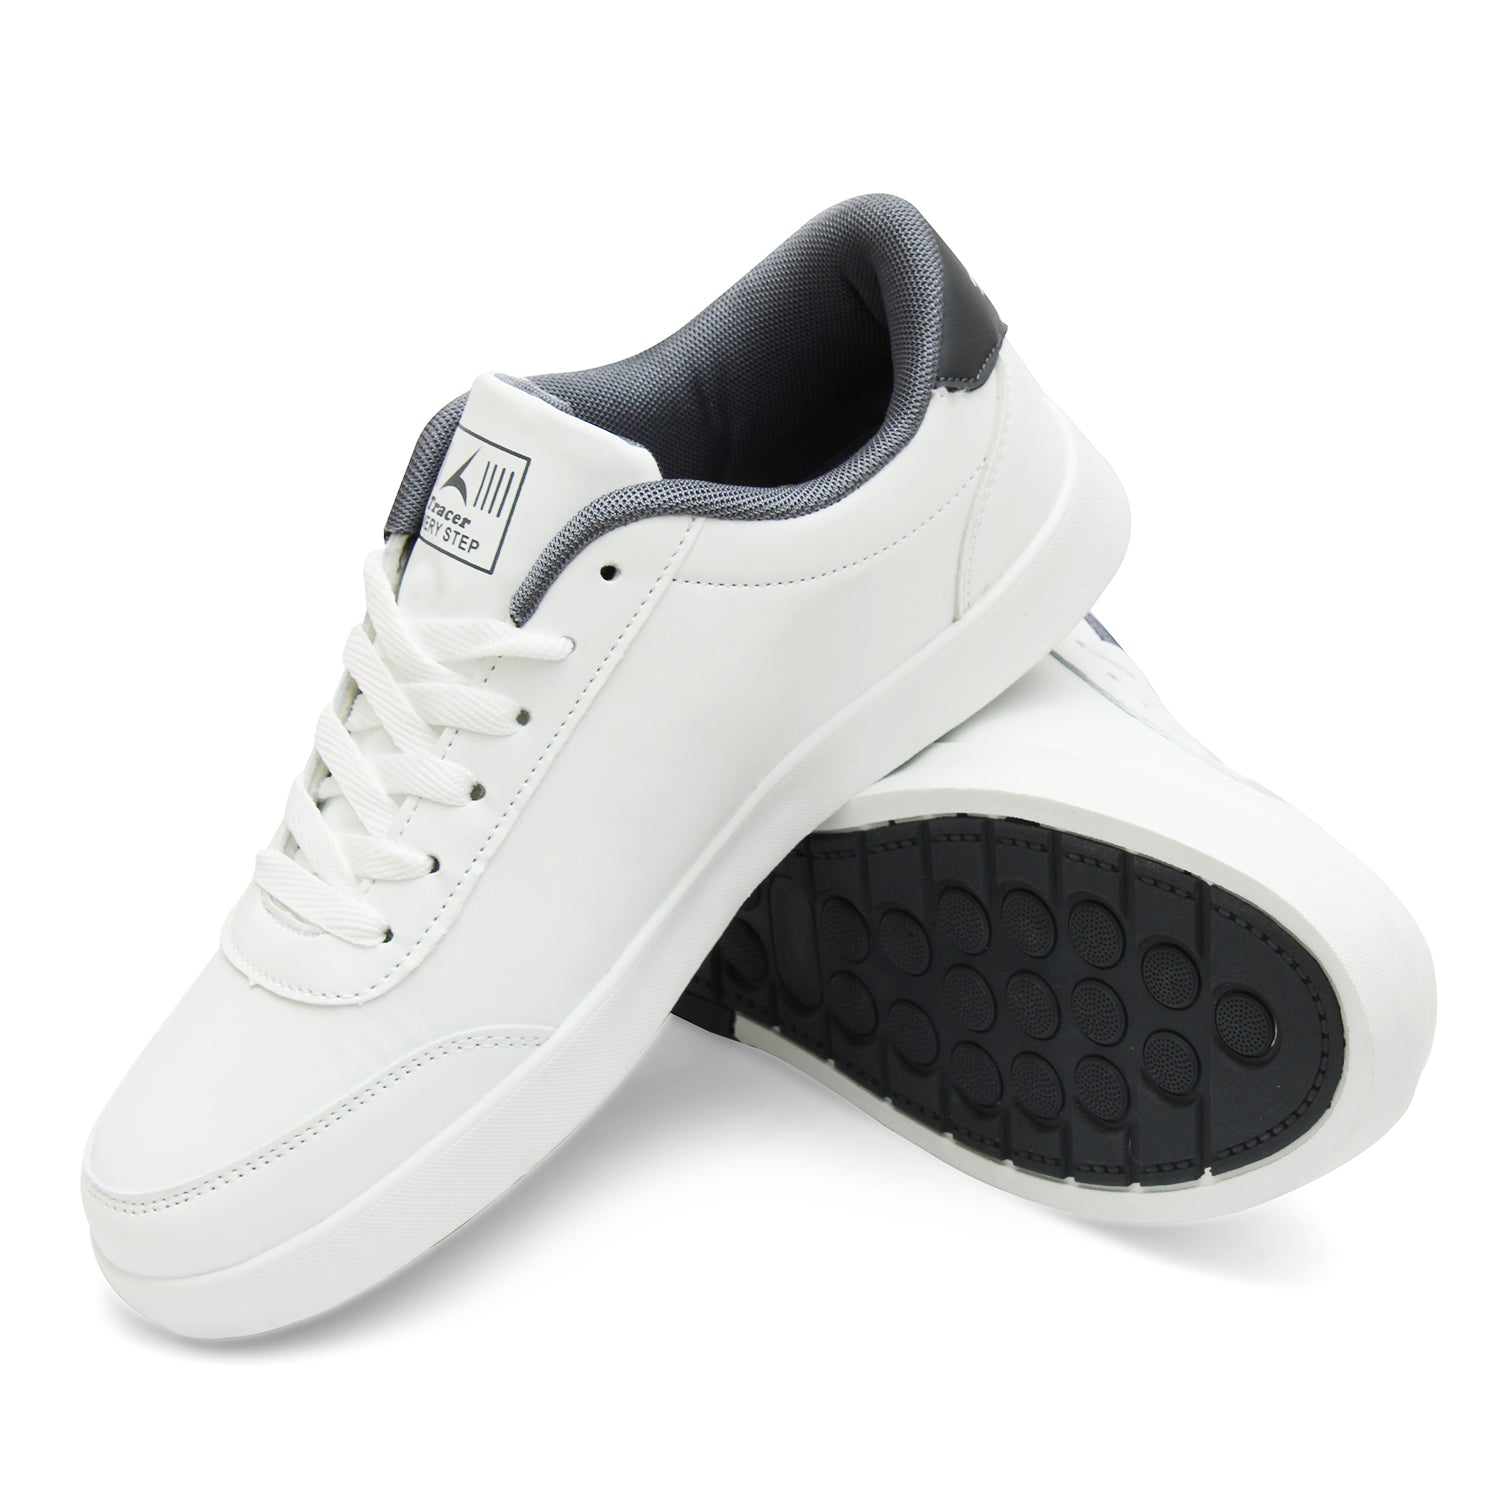  Men's Sneakers White